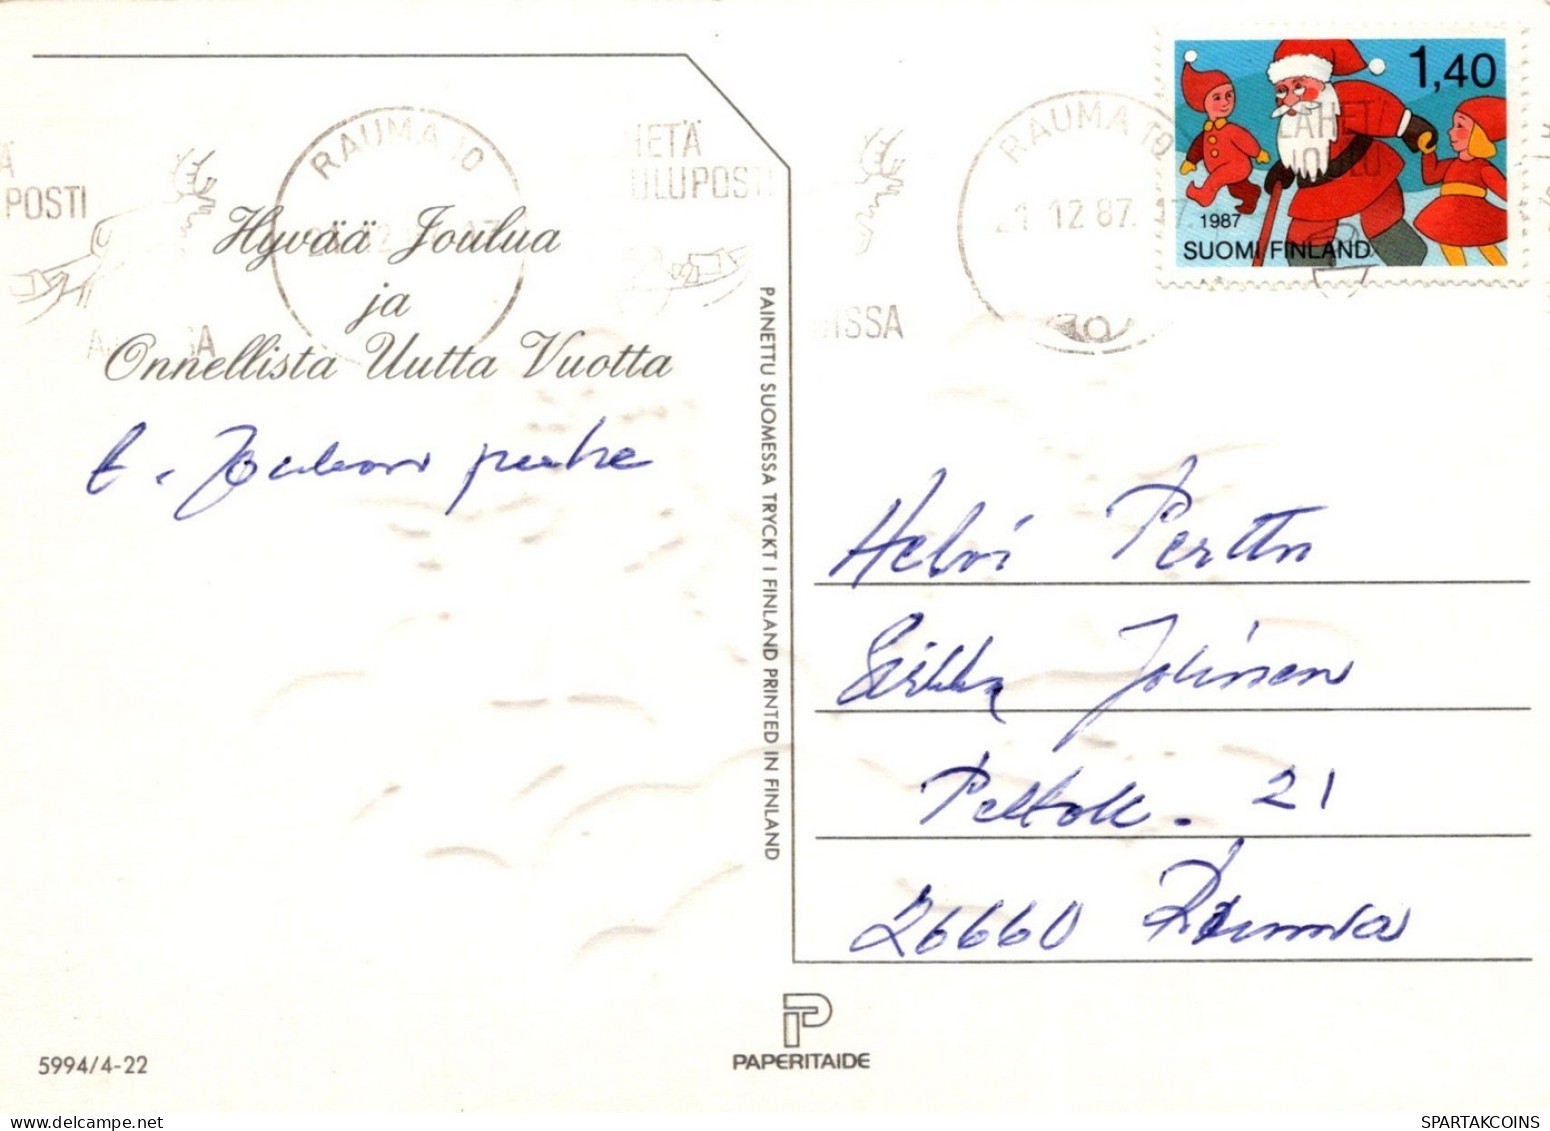 ANGEL CHRISTMAS Holidays Vintage Postcard CPSM #PAH033.GB - Angels